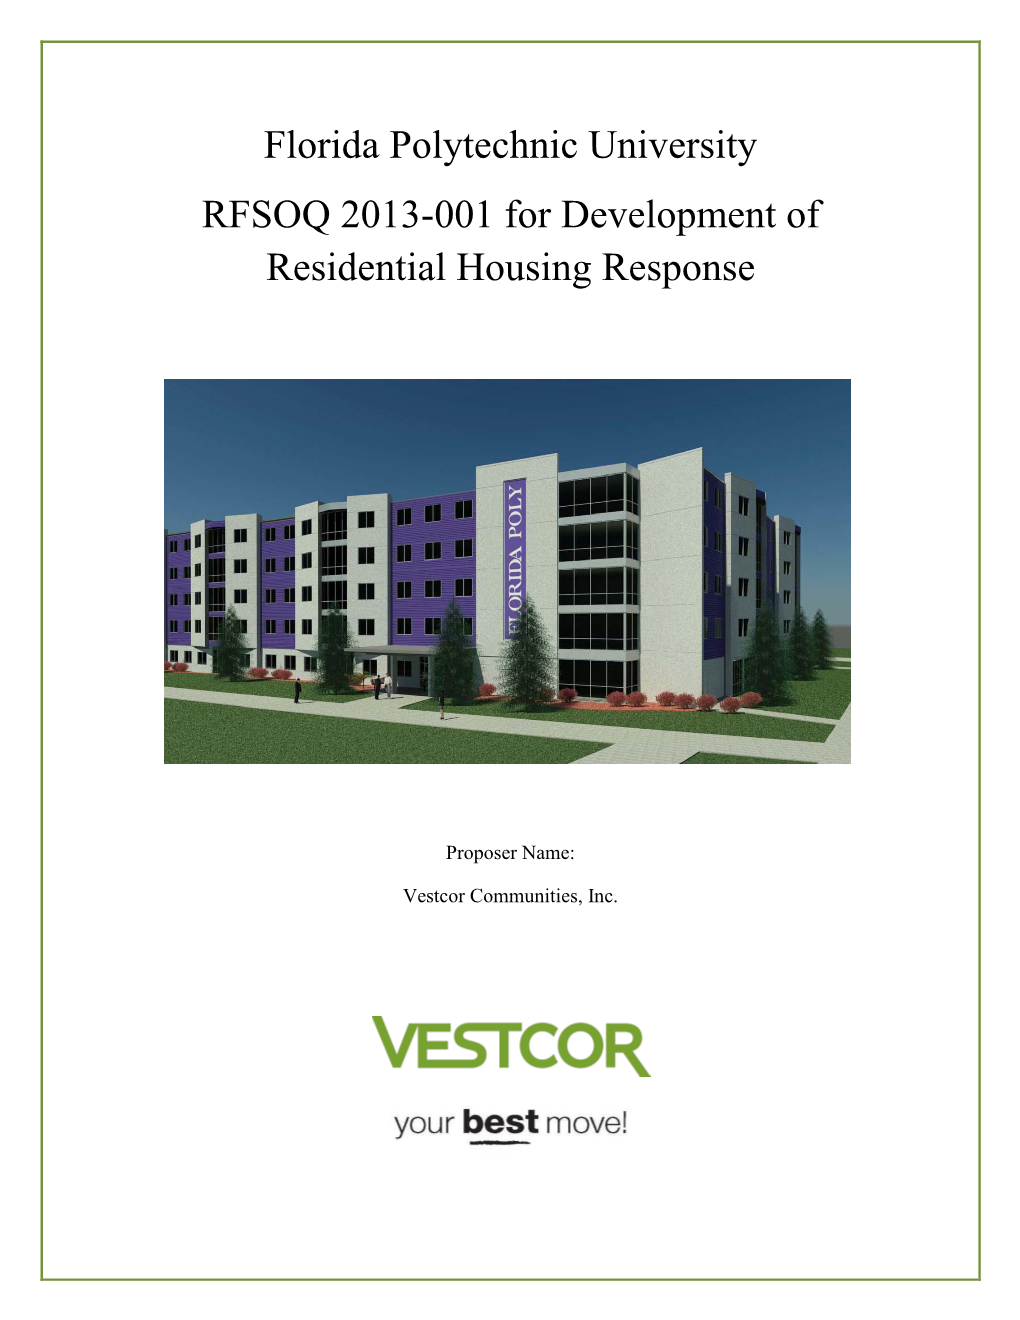 Florida Polytechnic University RFSOQ 2013-001 for Development of Residential Housing Response